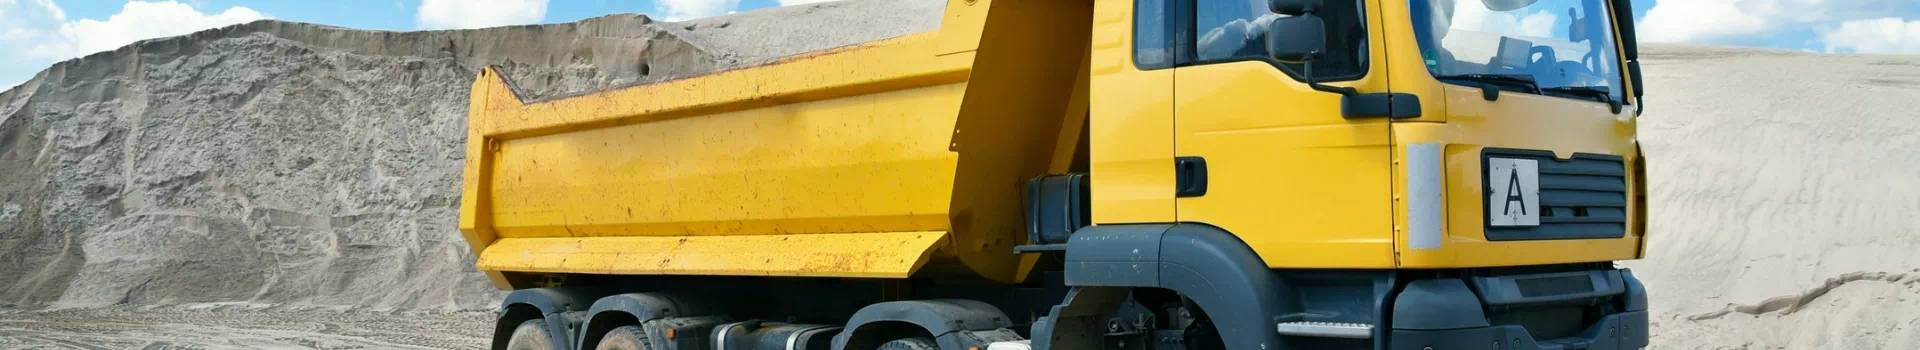 Żółta ciężarówka